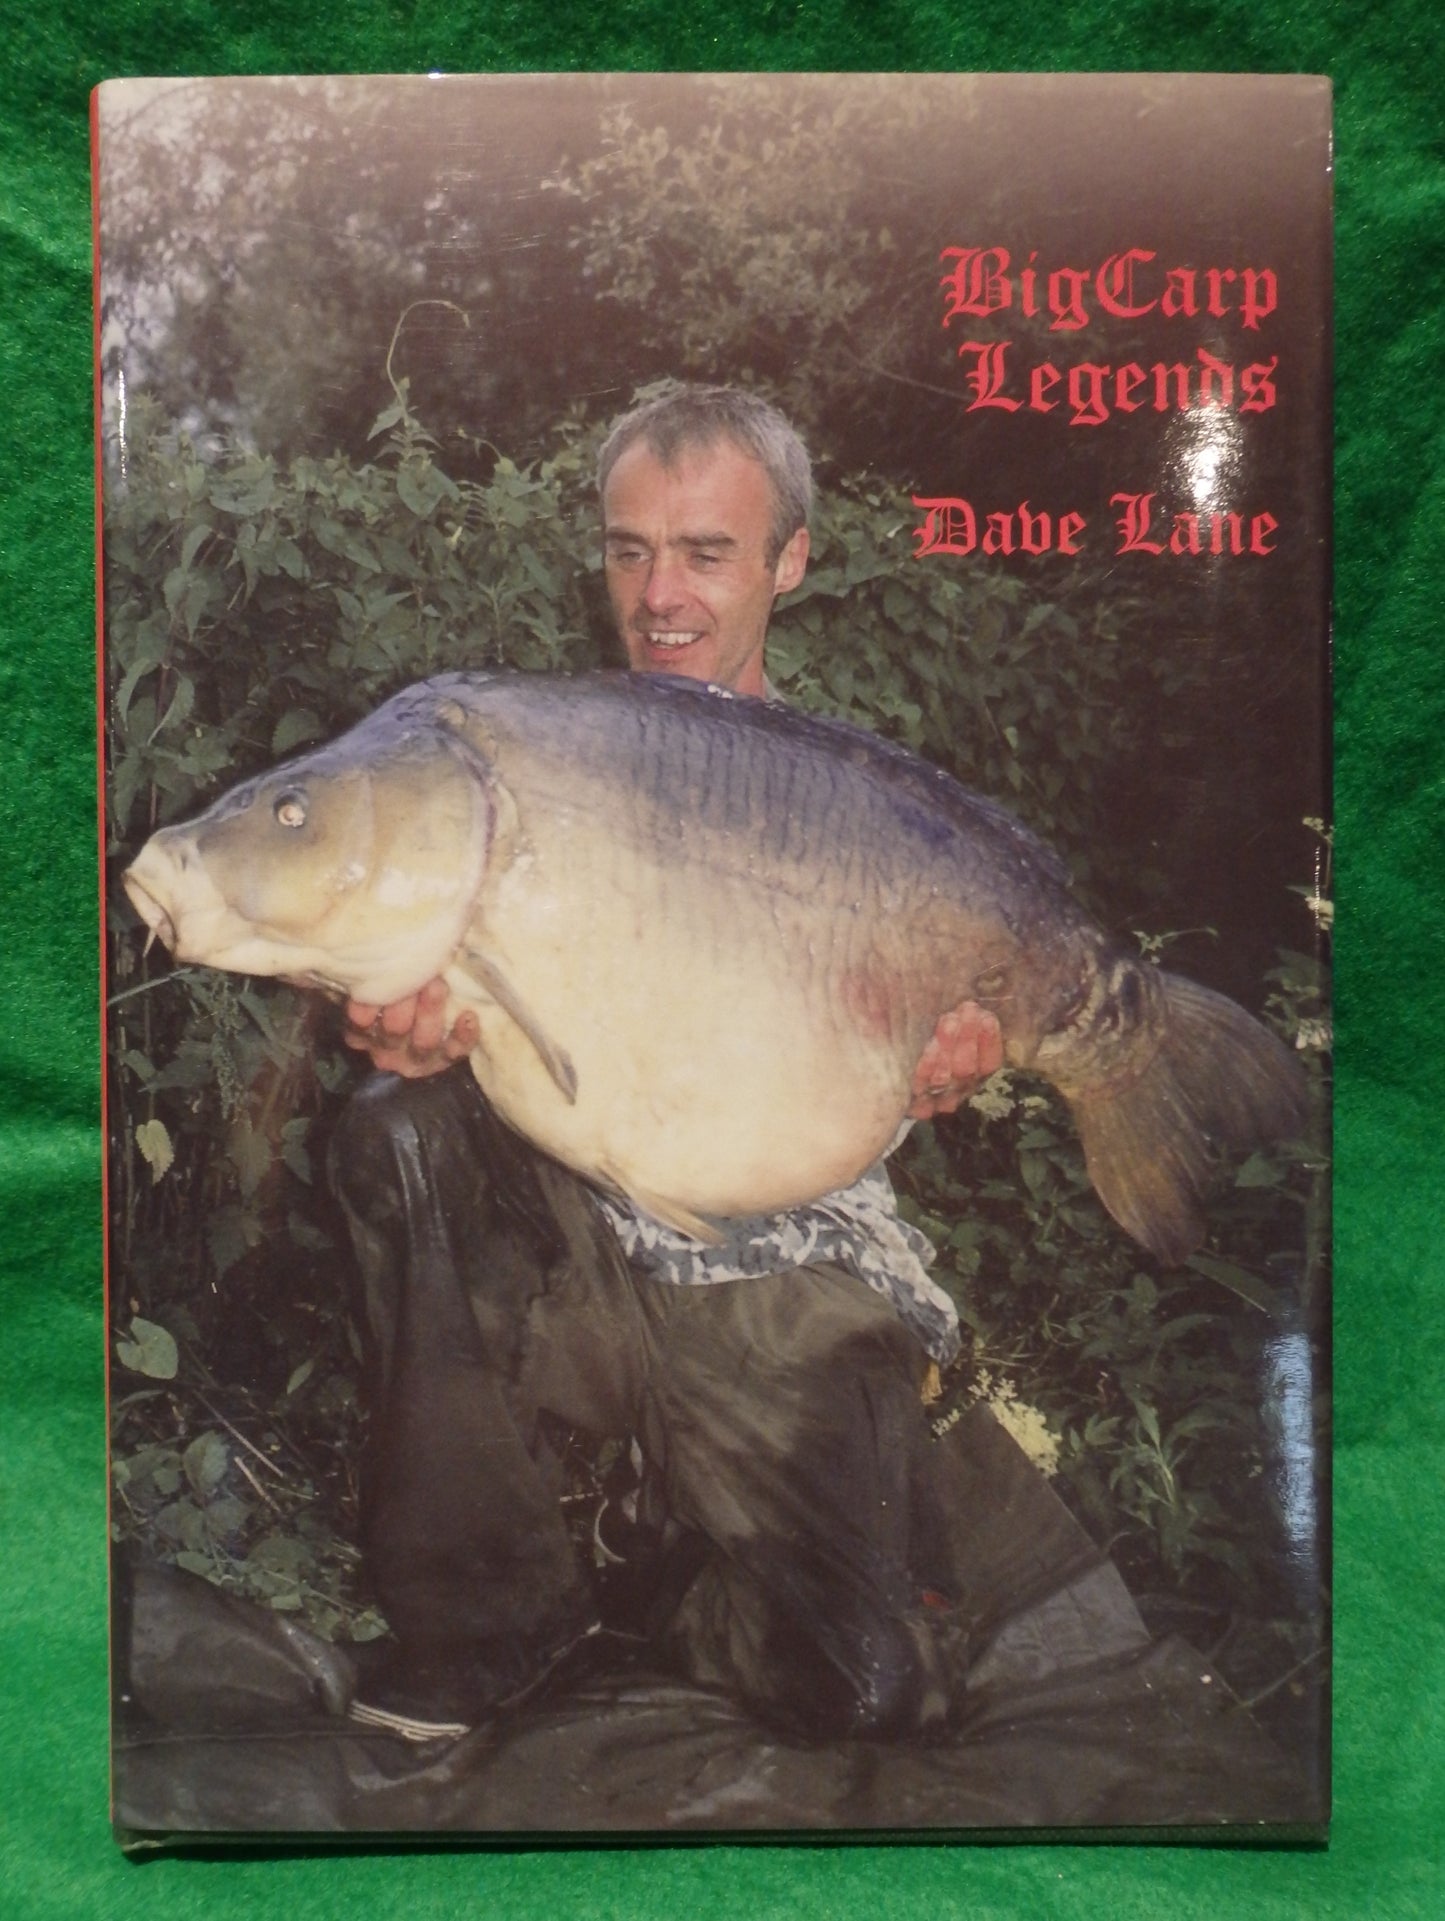 Big Carp Legends - Dave Lane